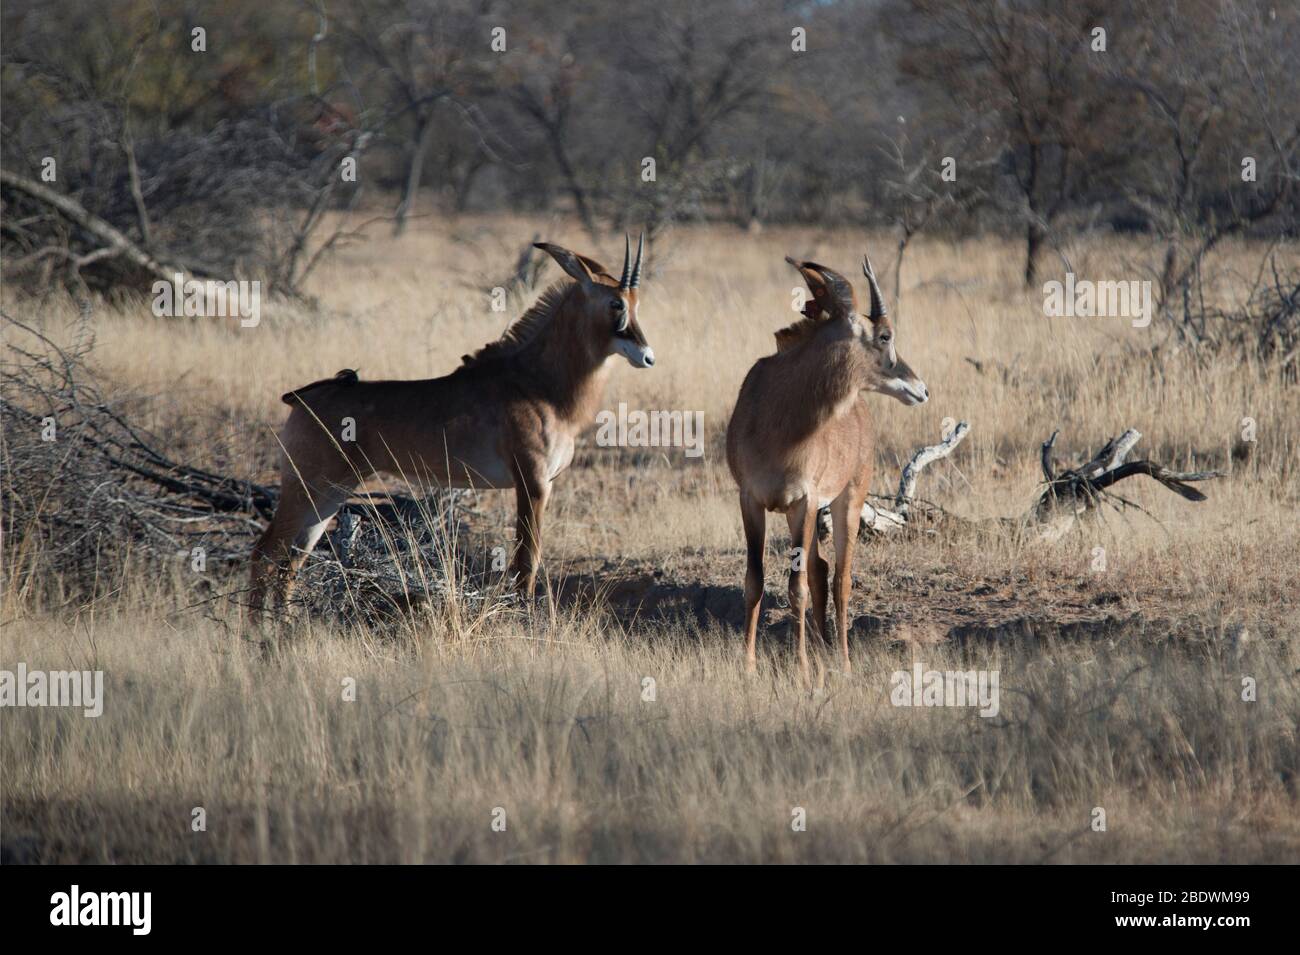 Roan Antelope, Hippotragus equinus, Pair, Ant's Hill Reserve, in der Nähe von Valwater, Limpopo Provinz, Südafrika Stockfoto